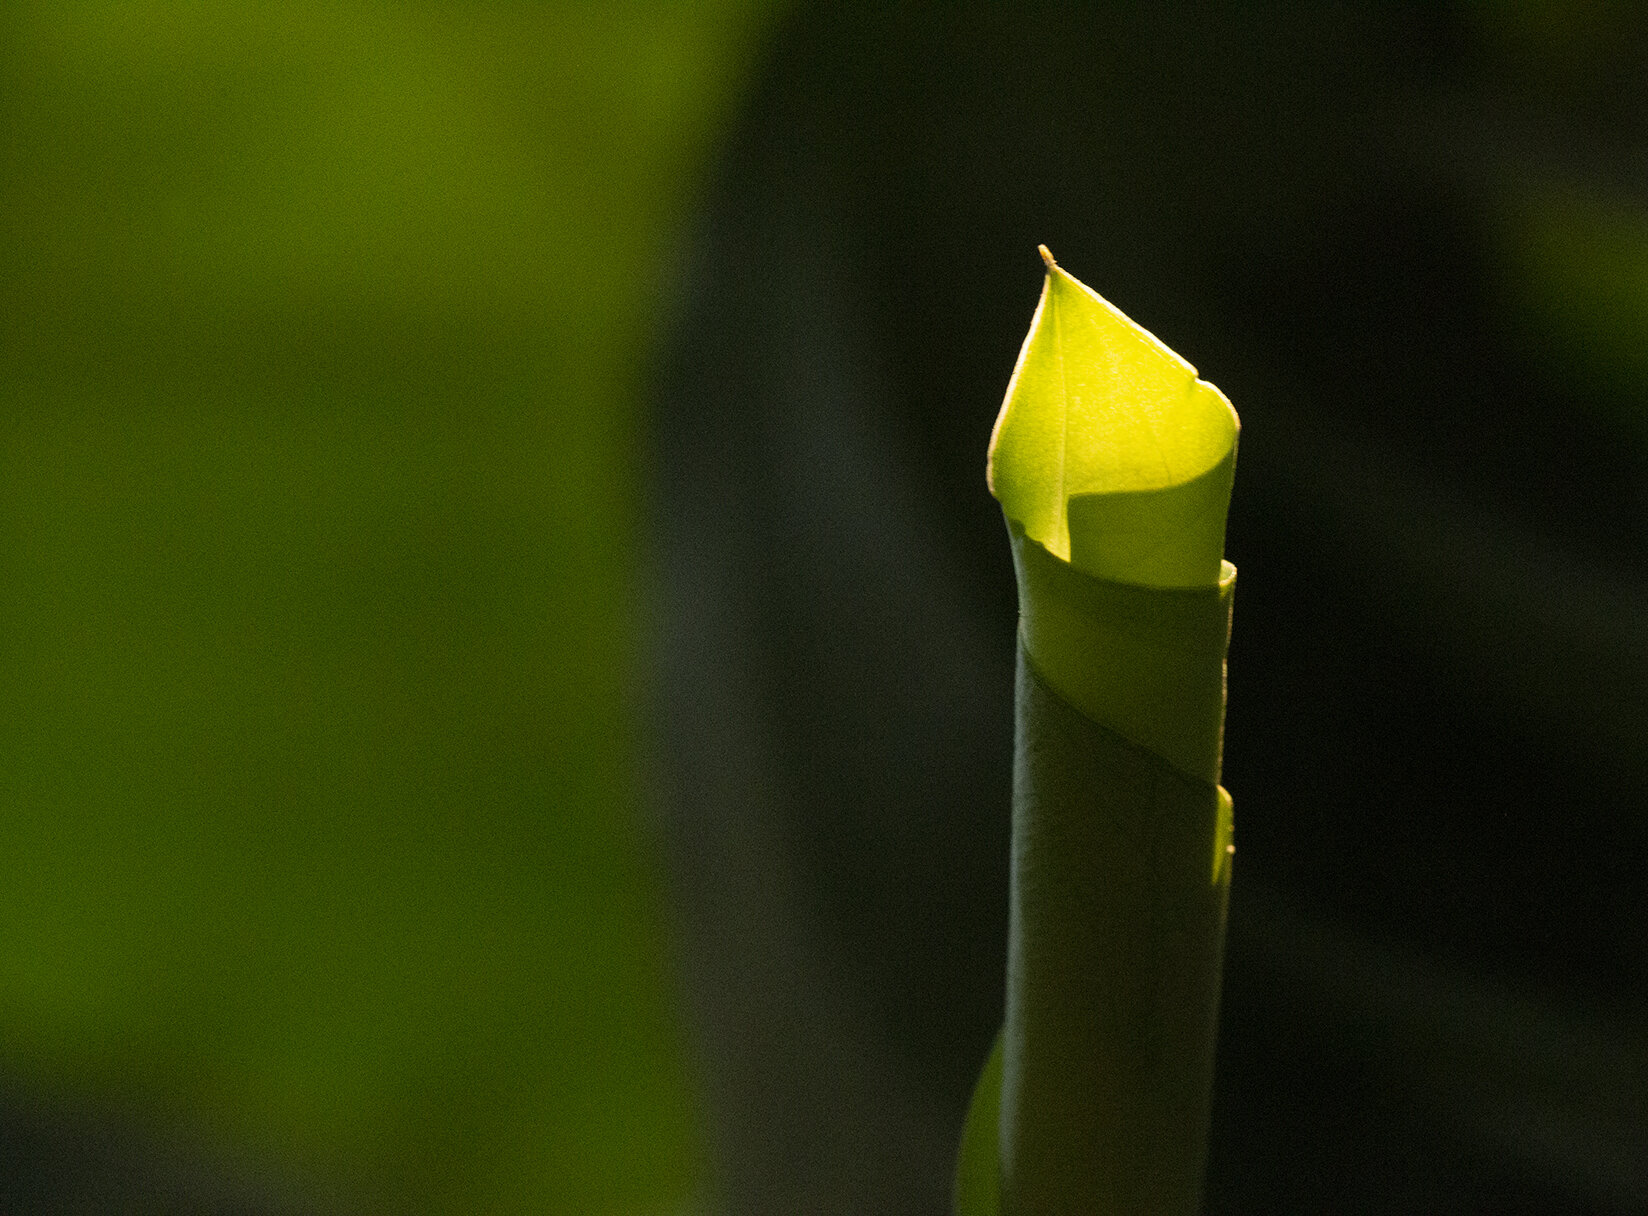  A new leaf on a prayer plant, Frederick County, Maryland 